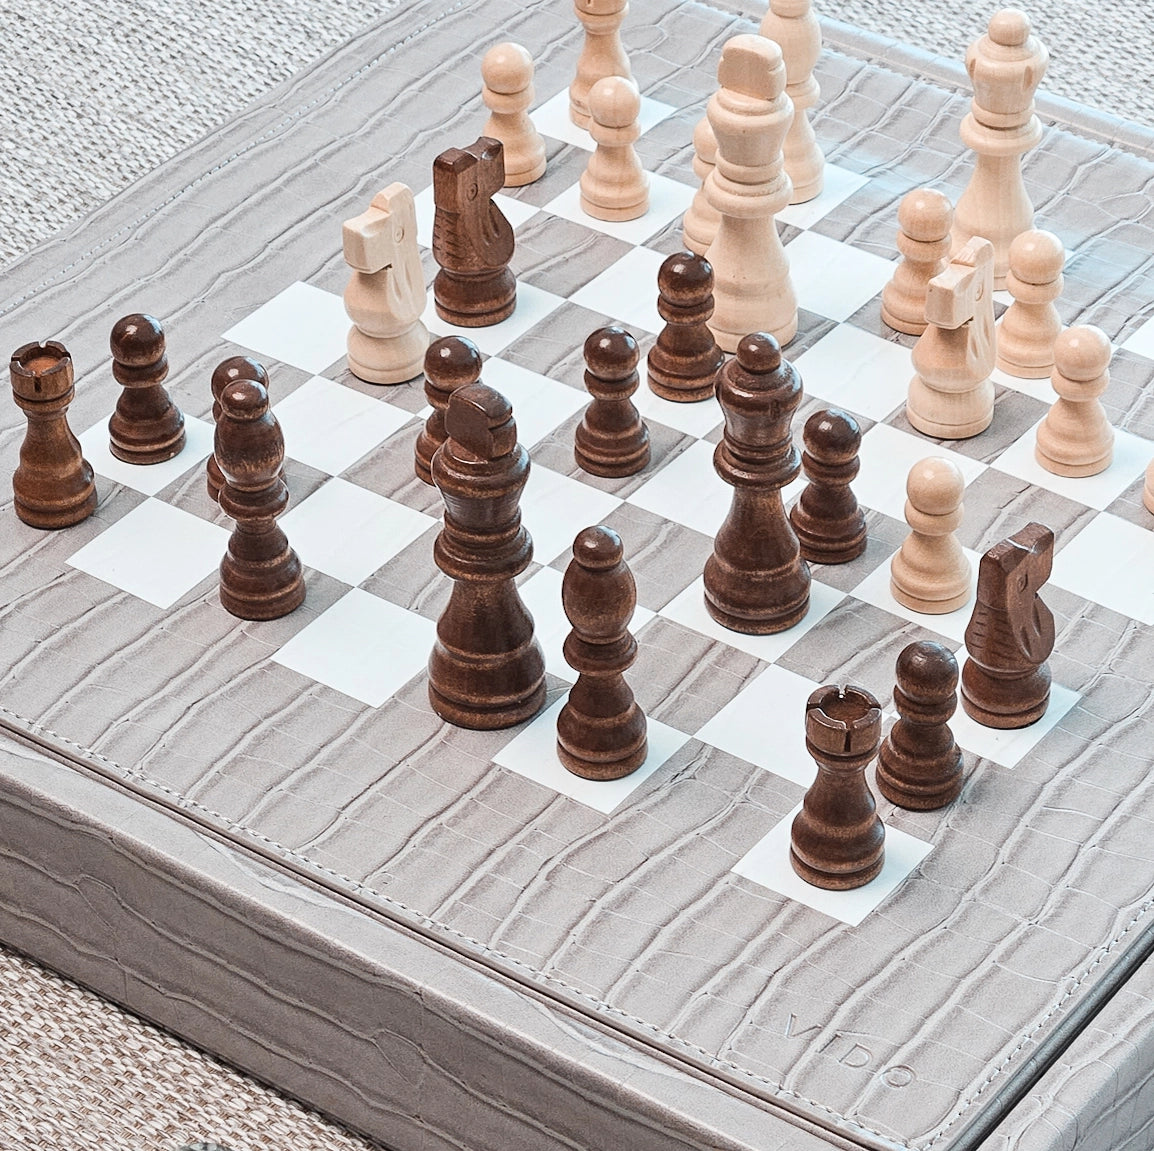 Mouse Grey Alligator Chess Set